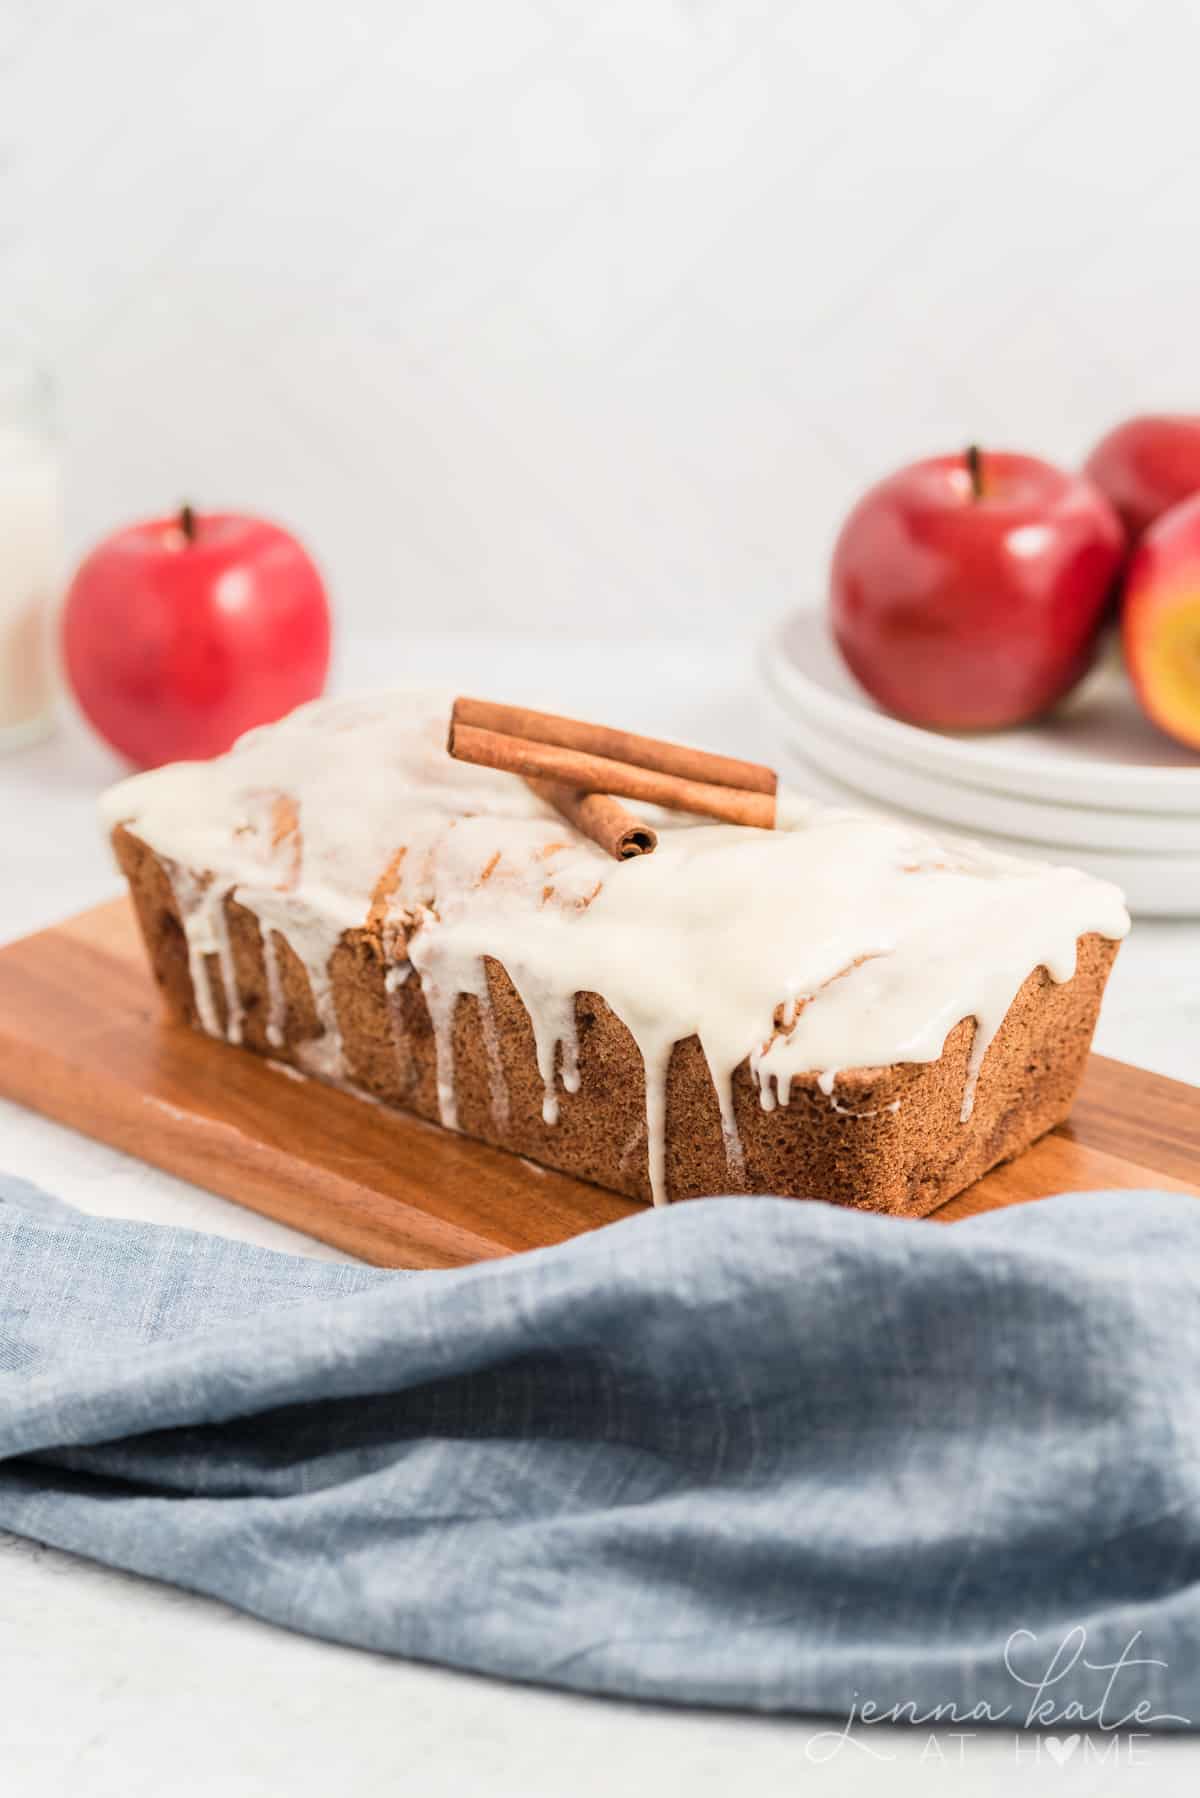 Cinnamon apple quick bread loaf with vanilla glaze and cinnamon sticks on top